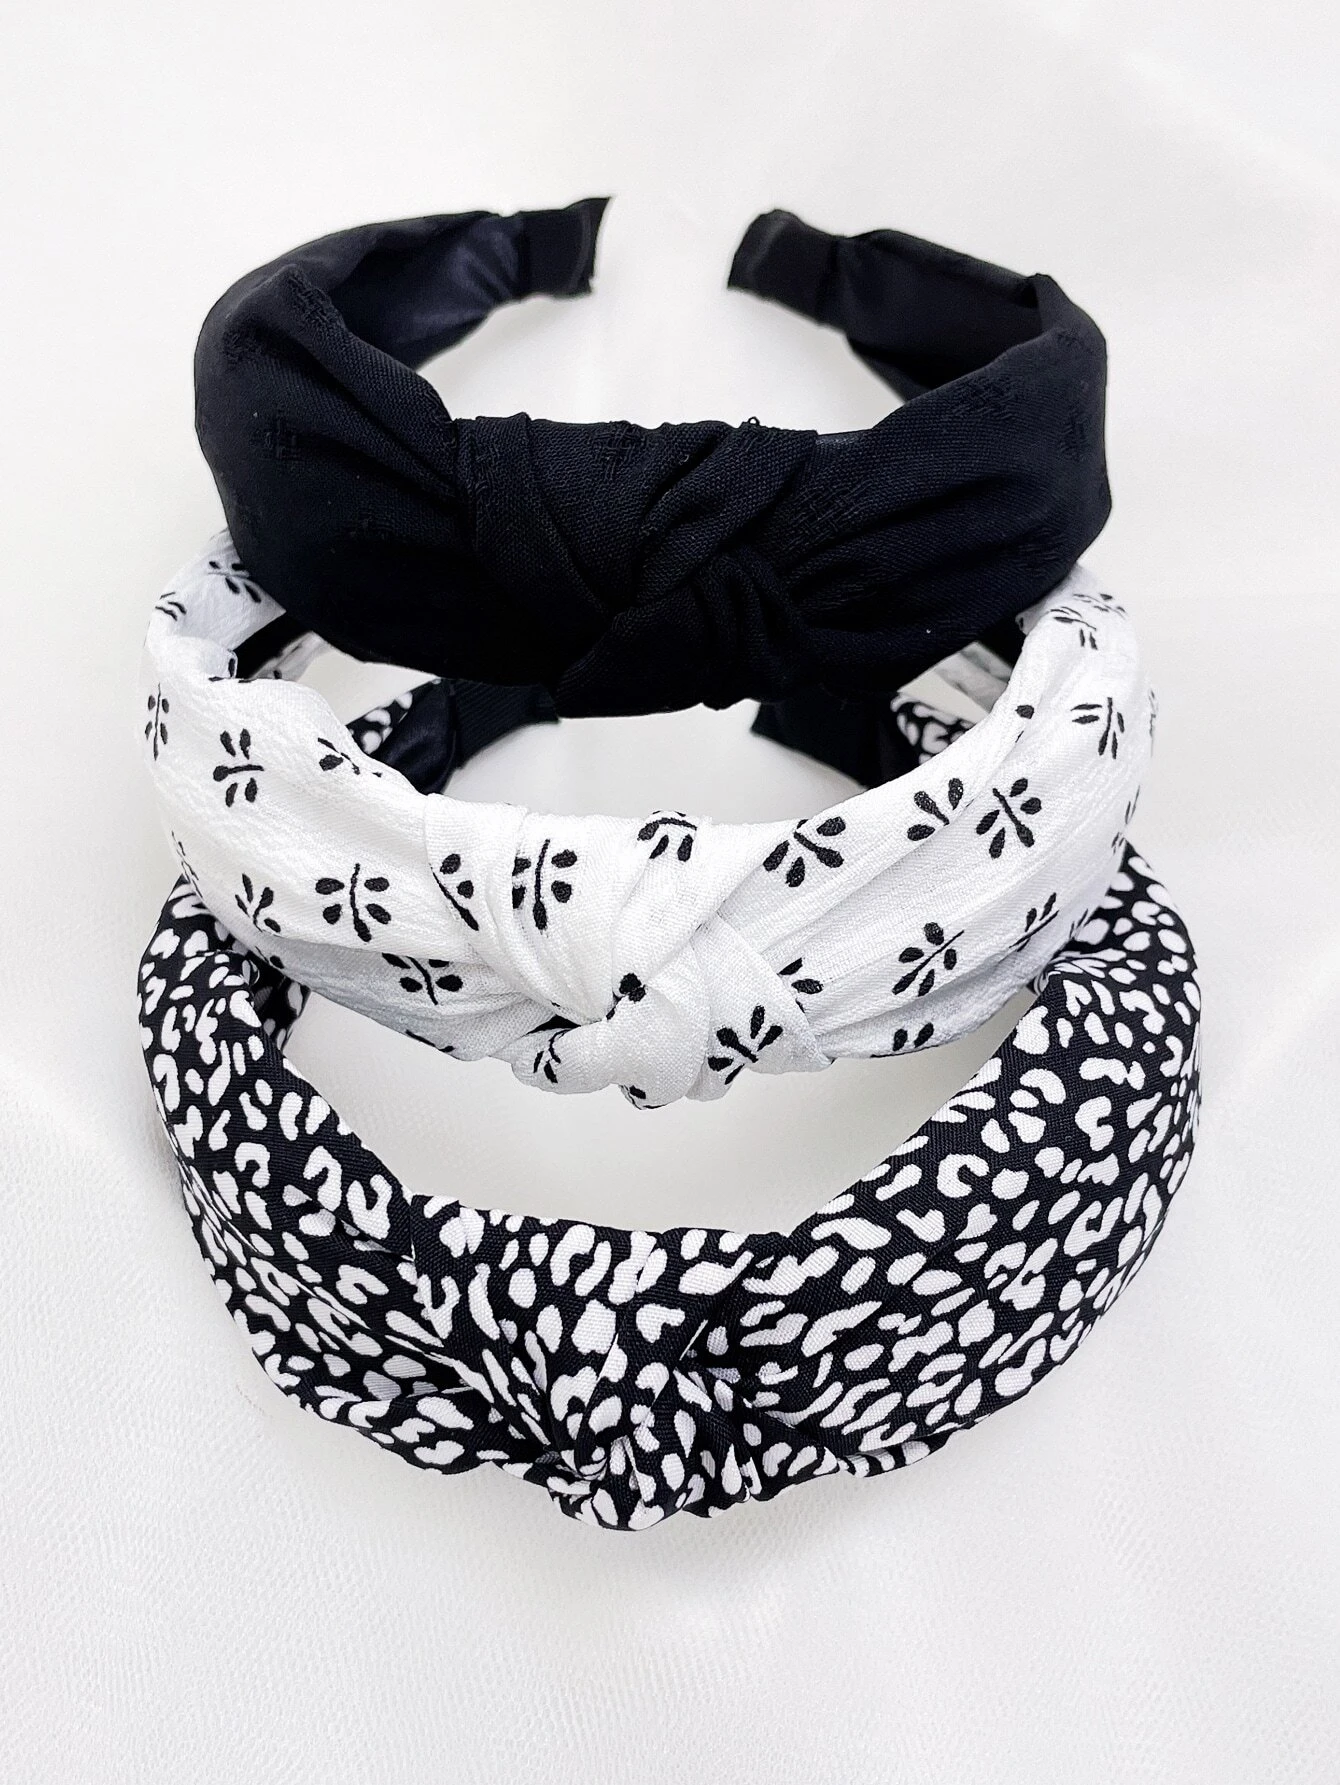 3pcs/set Women's Fashionable & Versatile Wide Knot Cloth Headbands In Multiple Colors & Leopard Prints, Suitable For Daily Use & Commute